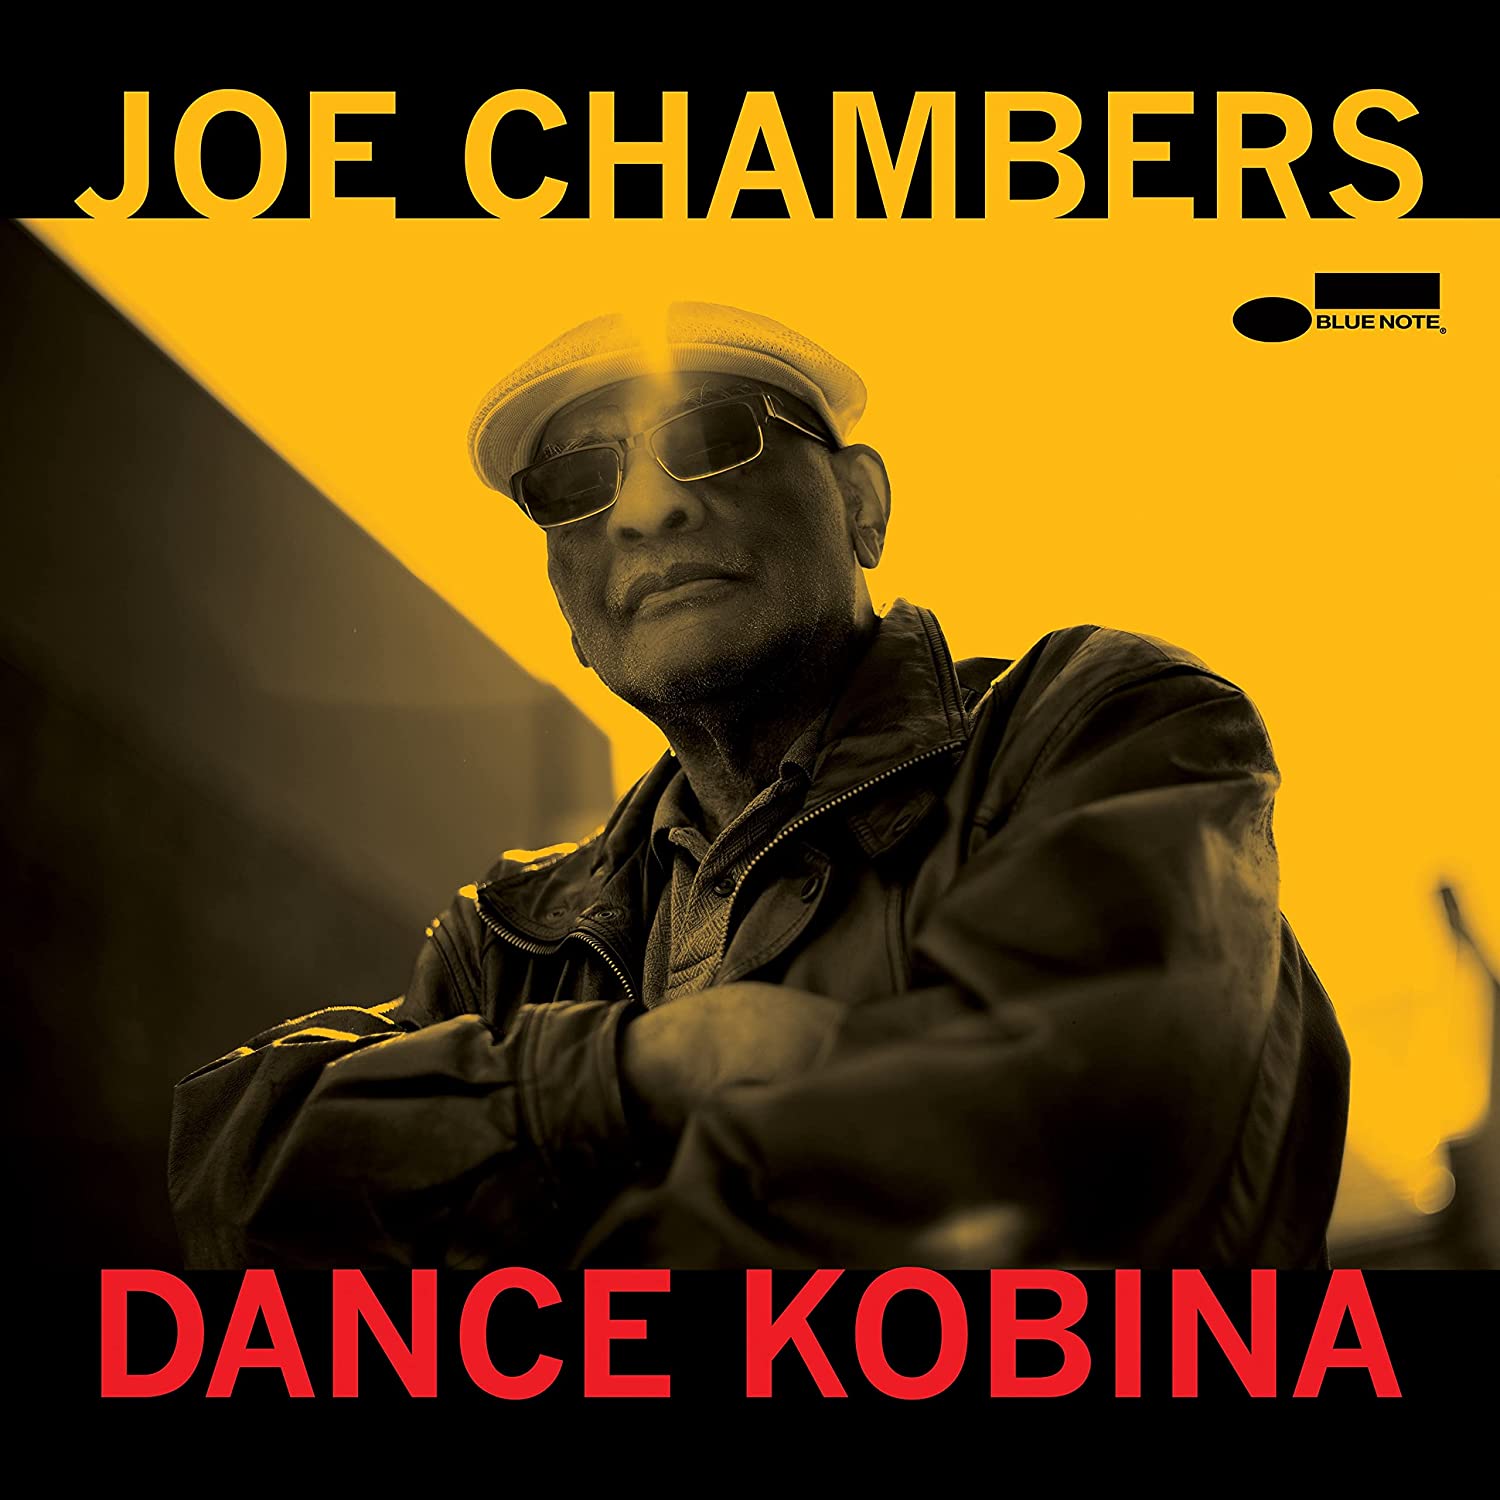 JOE CHAMBERS - Dance Kobina cover 